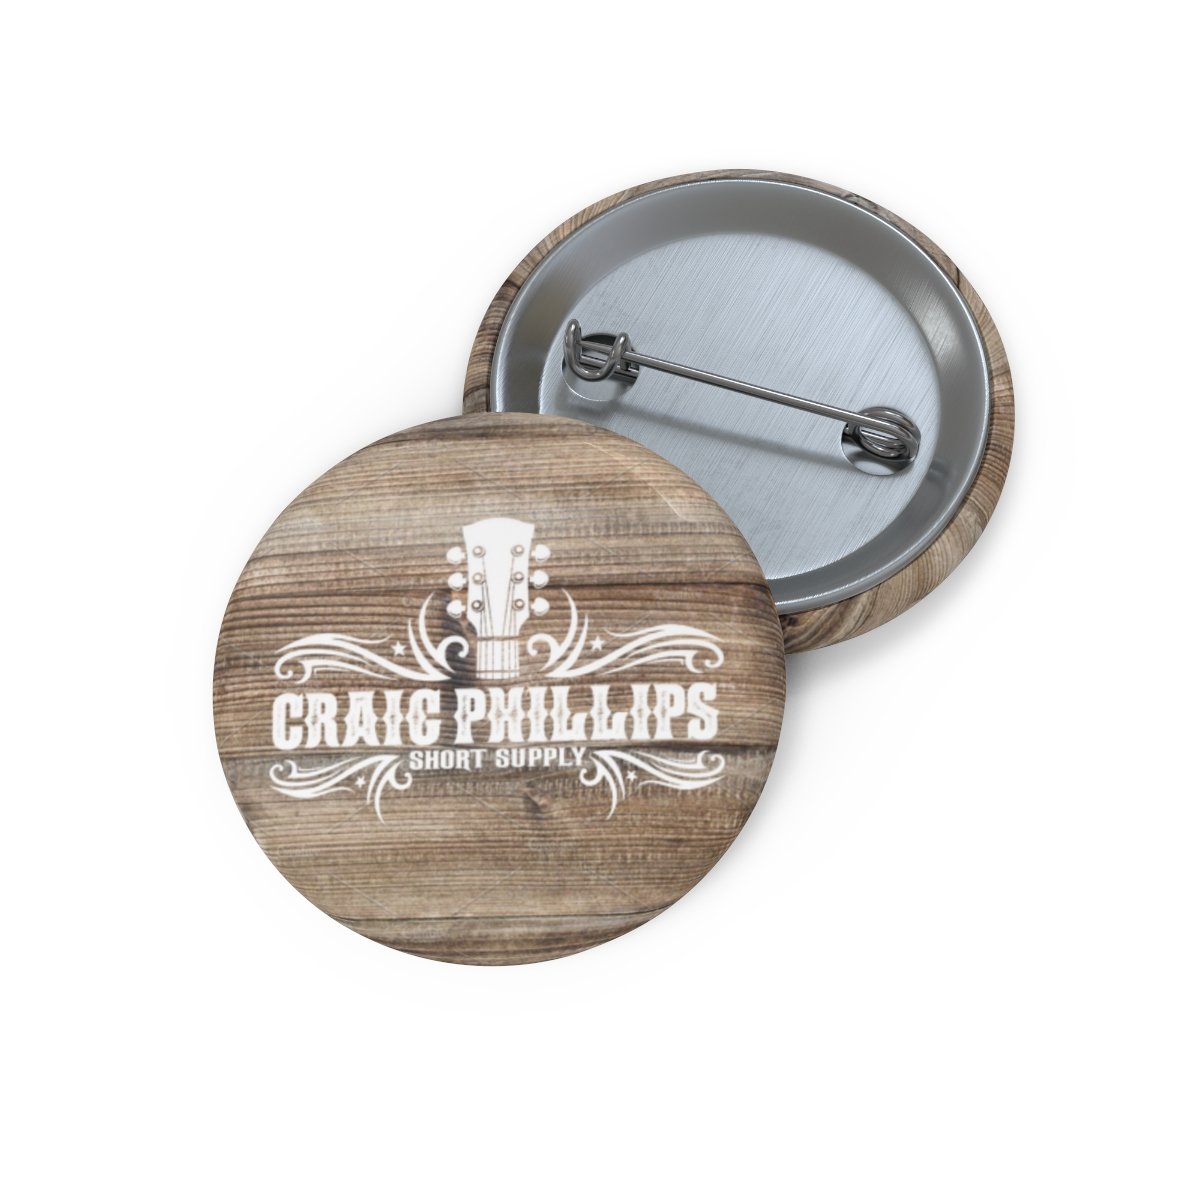 Craig Phillips – Short Supply White Logo on Wood Magazine Pin Buttons